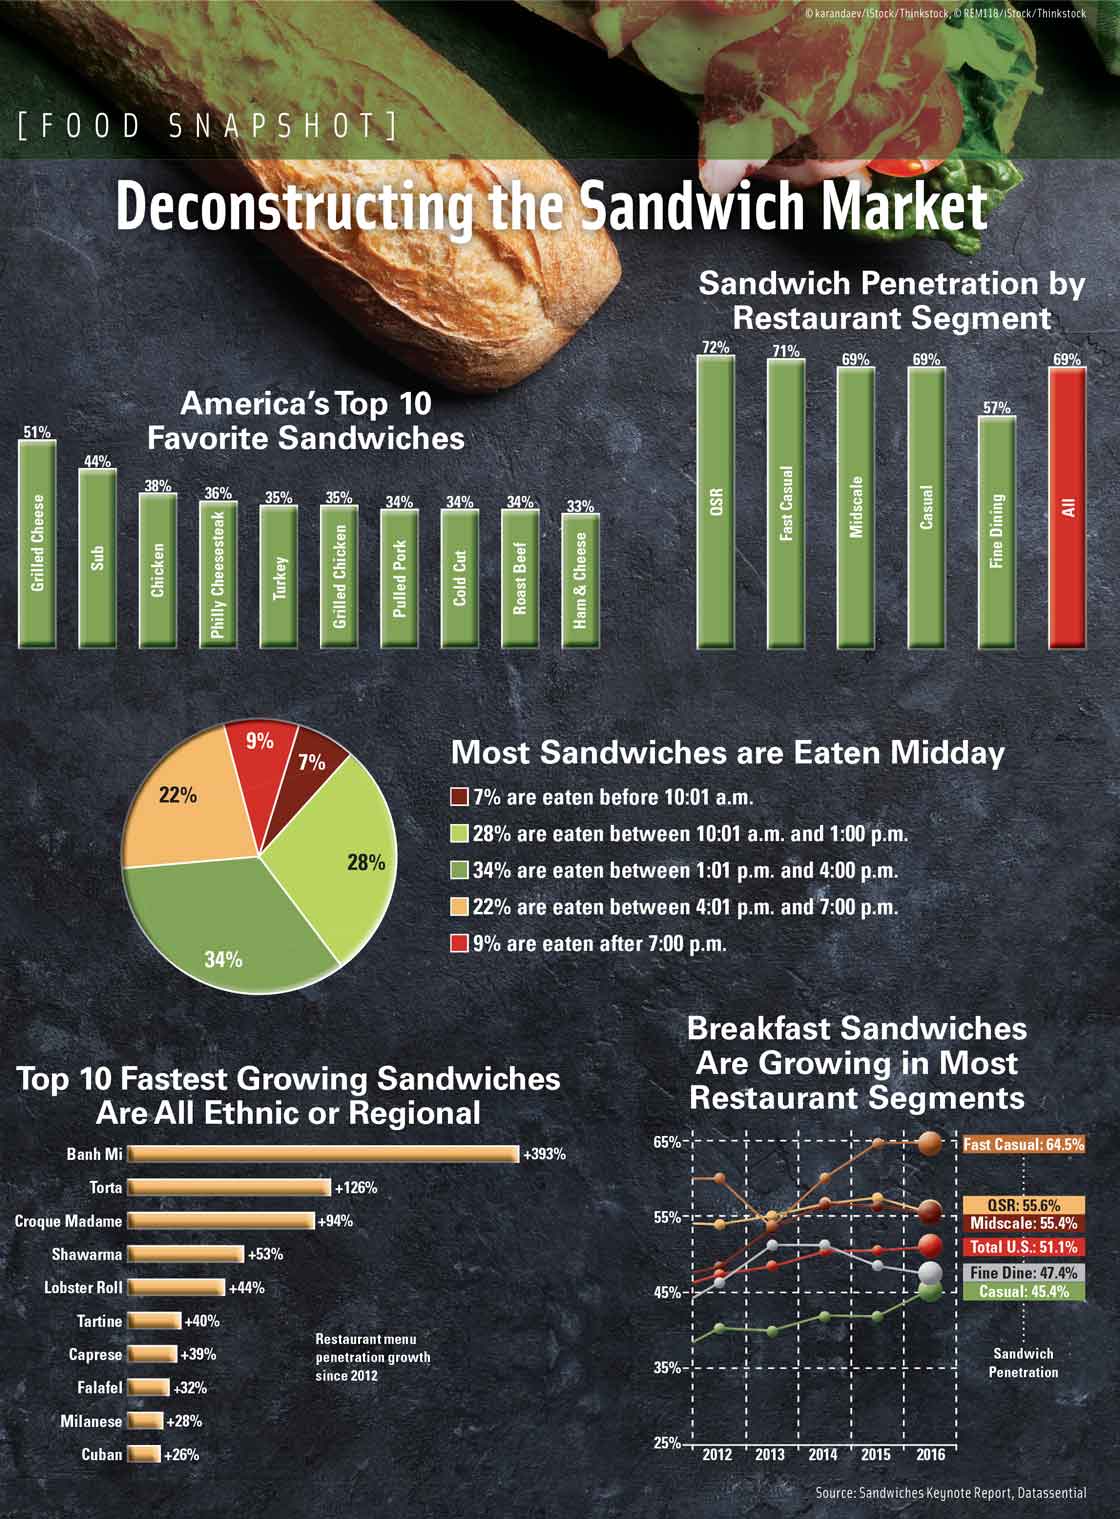 Deconstructing the Sandwich Market